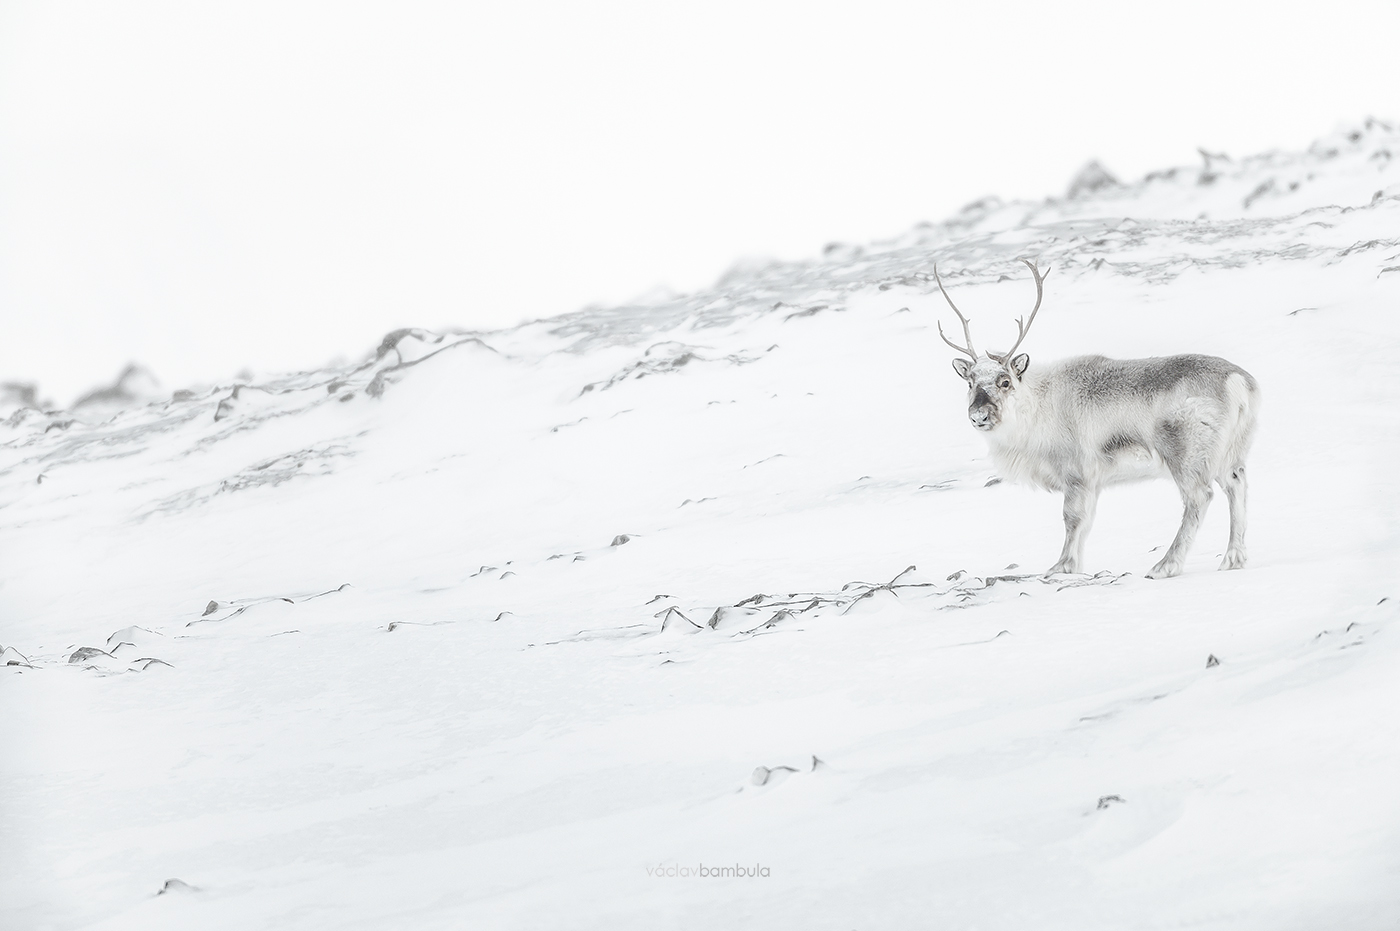 Sob polarni Svalbard reindeer Rangifer tarandus